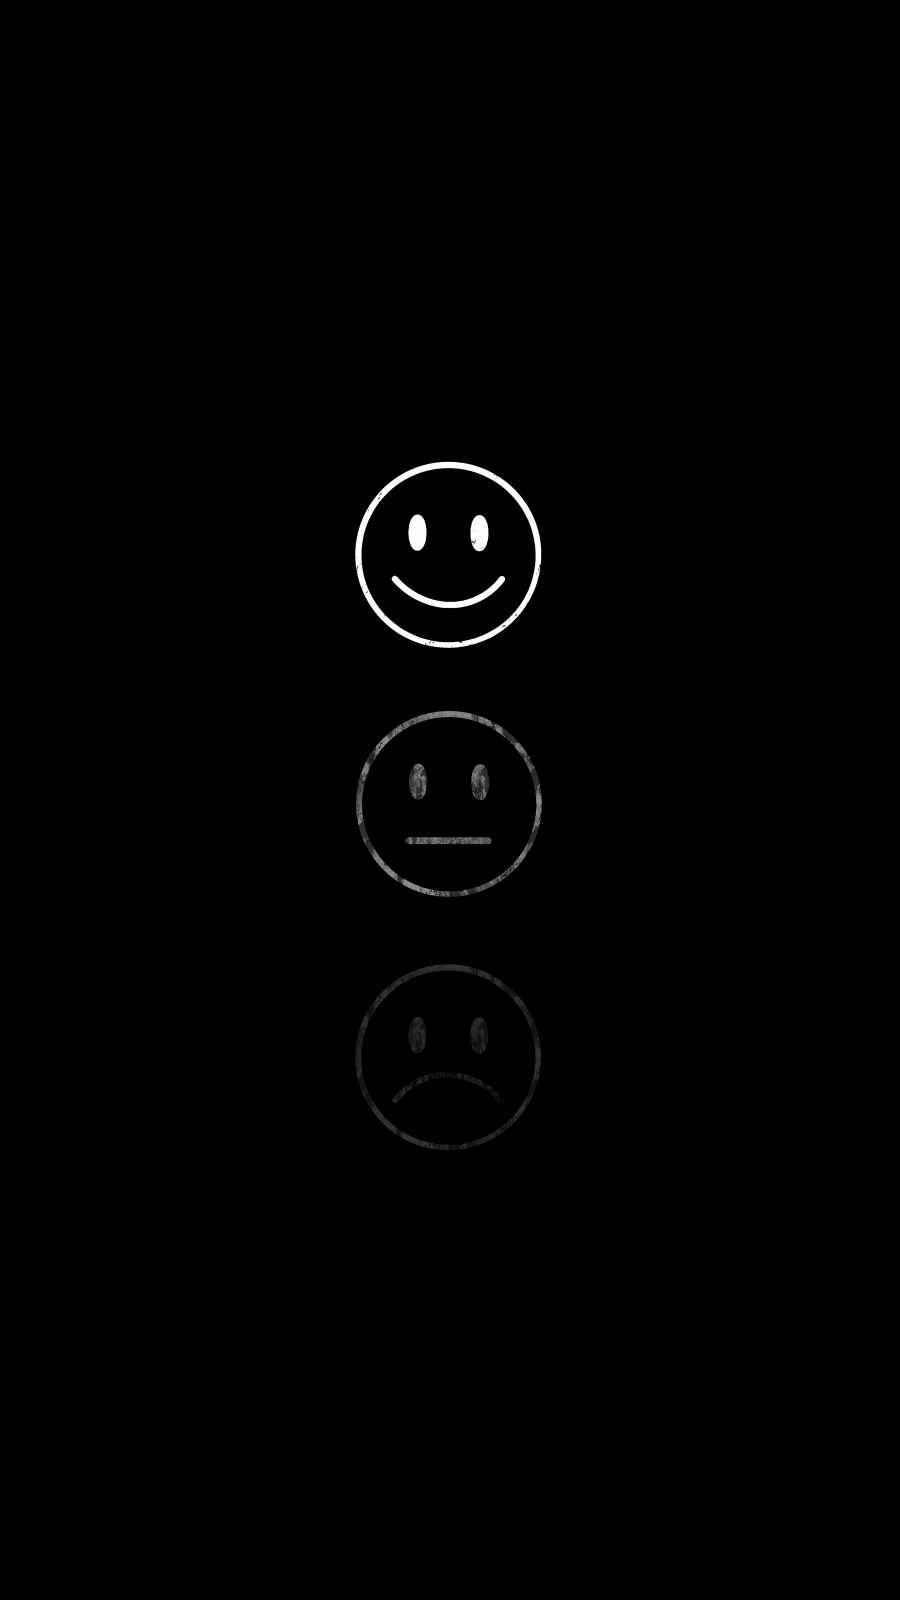 Download Sad Emojis Iphone Wallpaper 